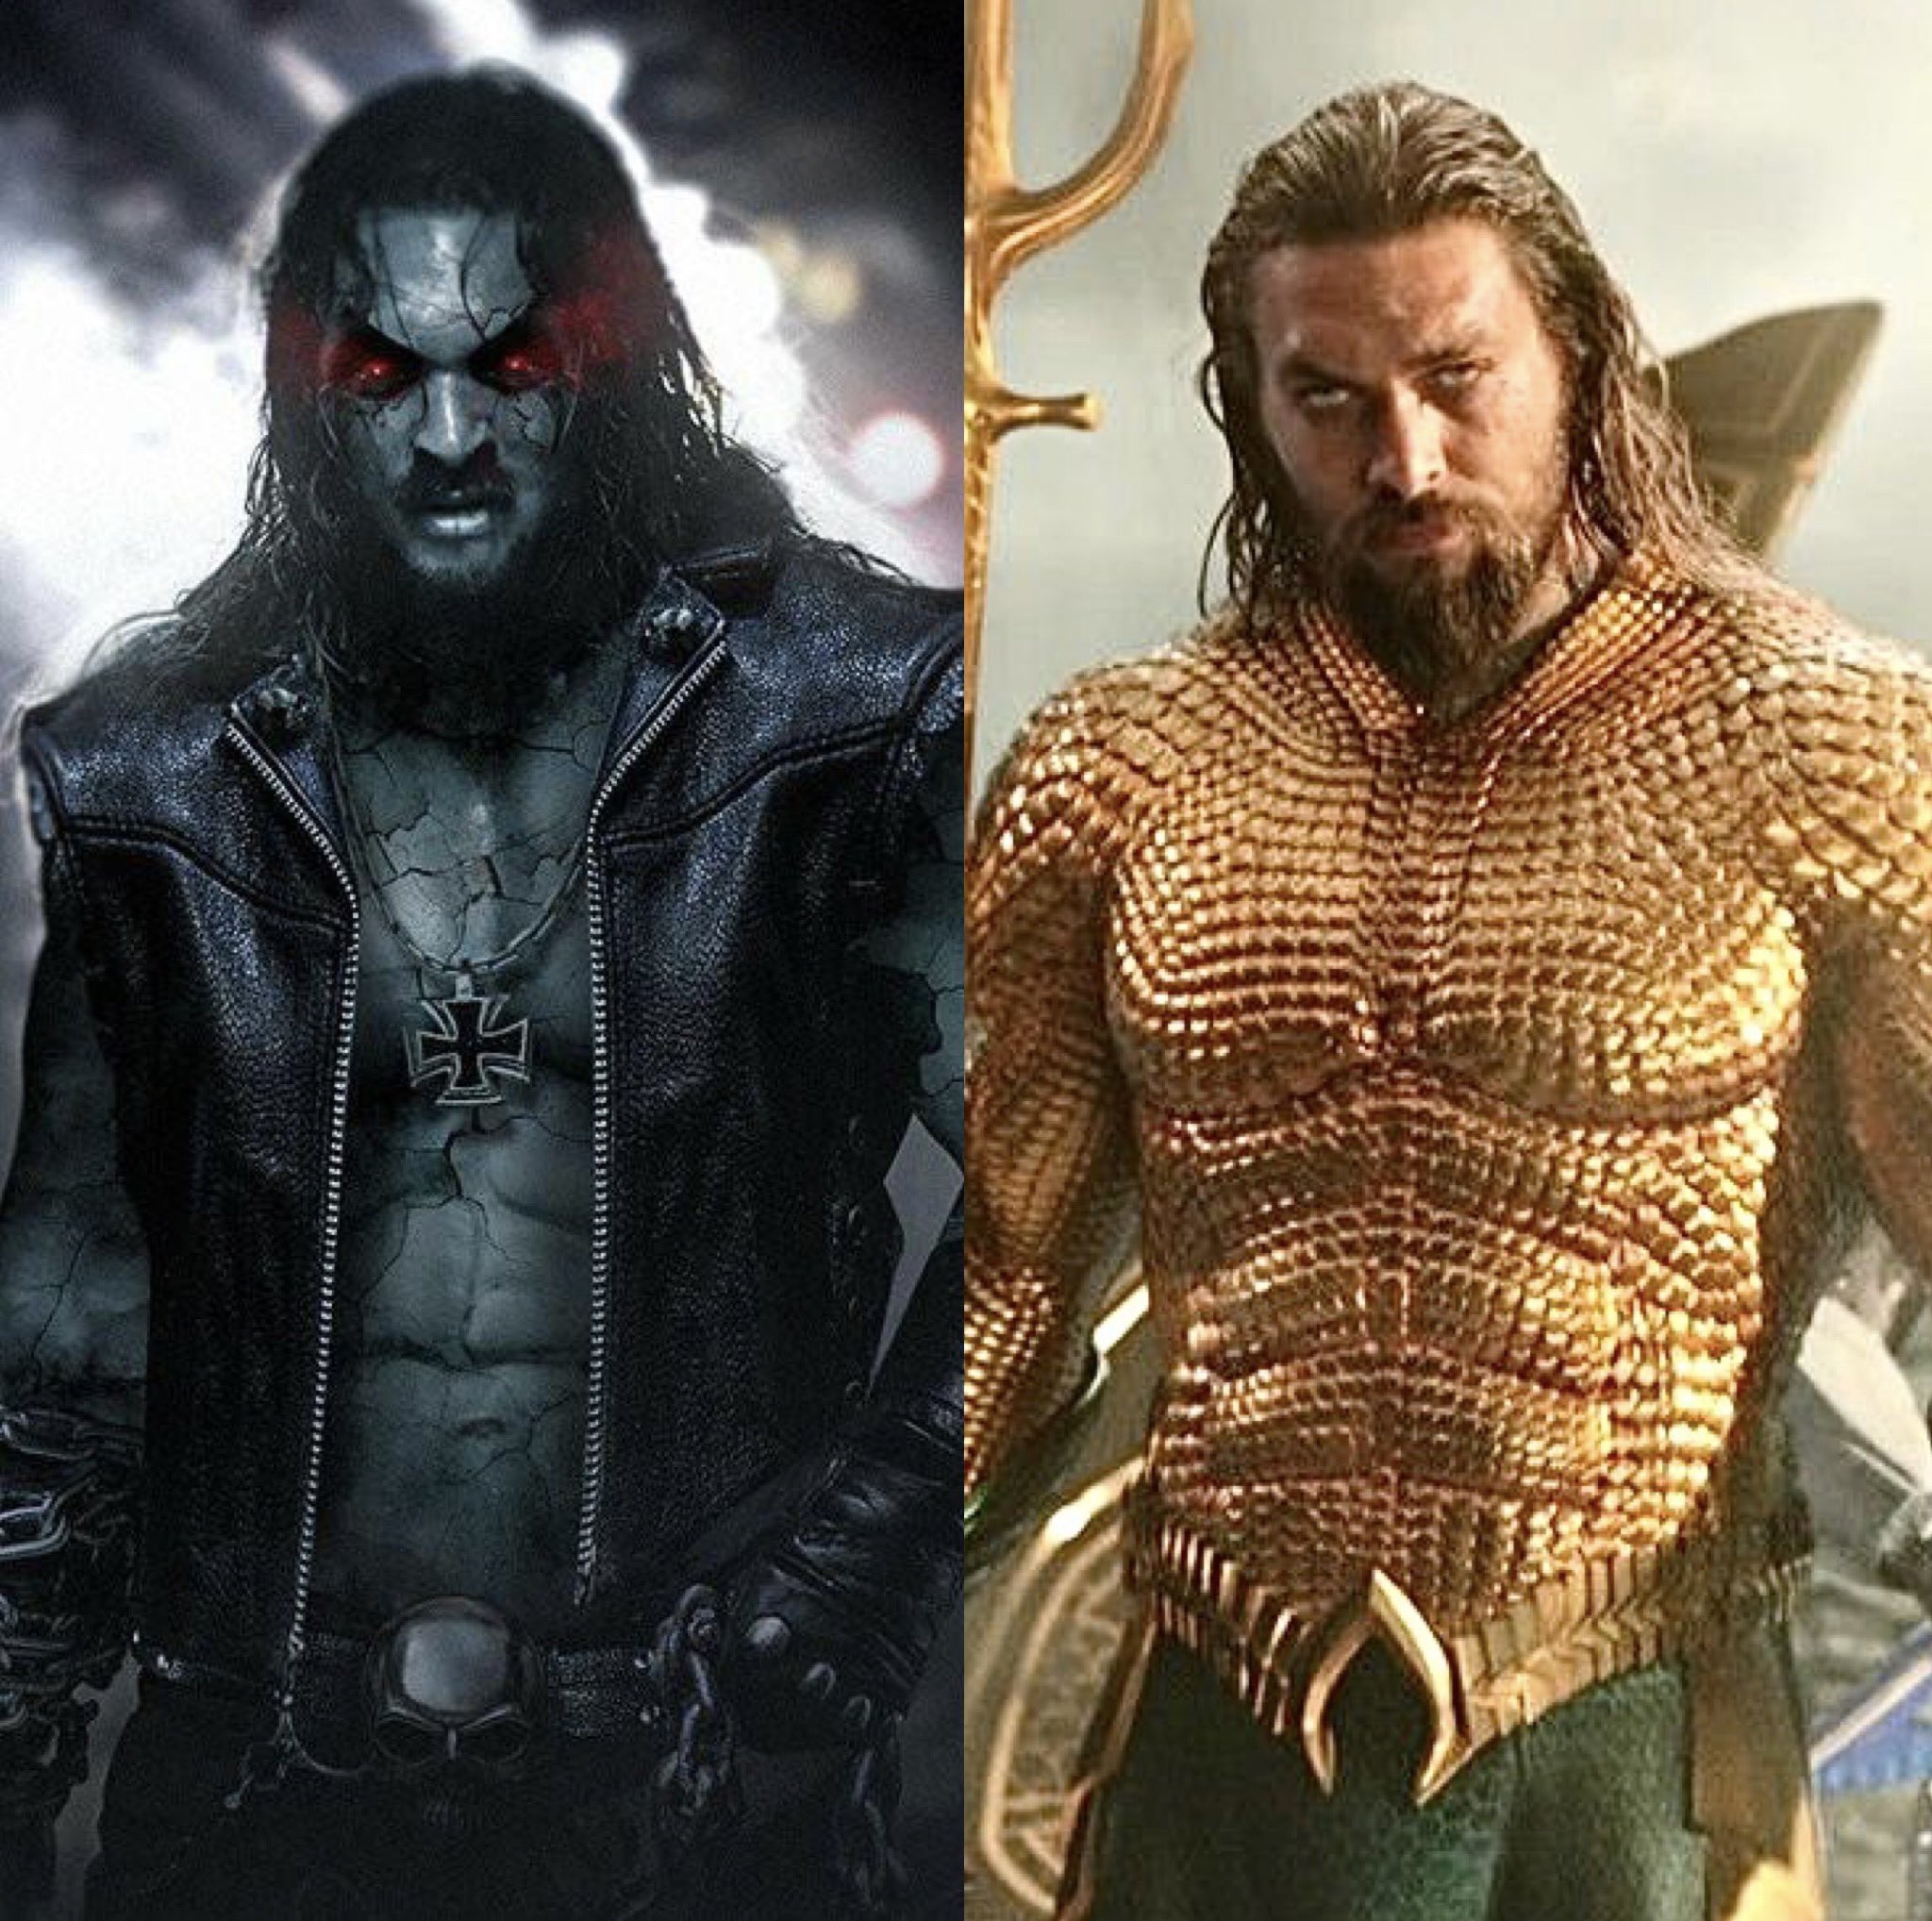 Heroic Hollywood on X: "Could Jason Momoa play Aquaman & Lobo https://t.co/fE31wI0qkM" / X